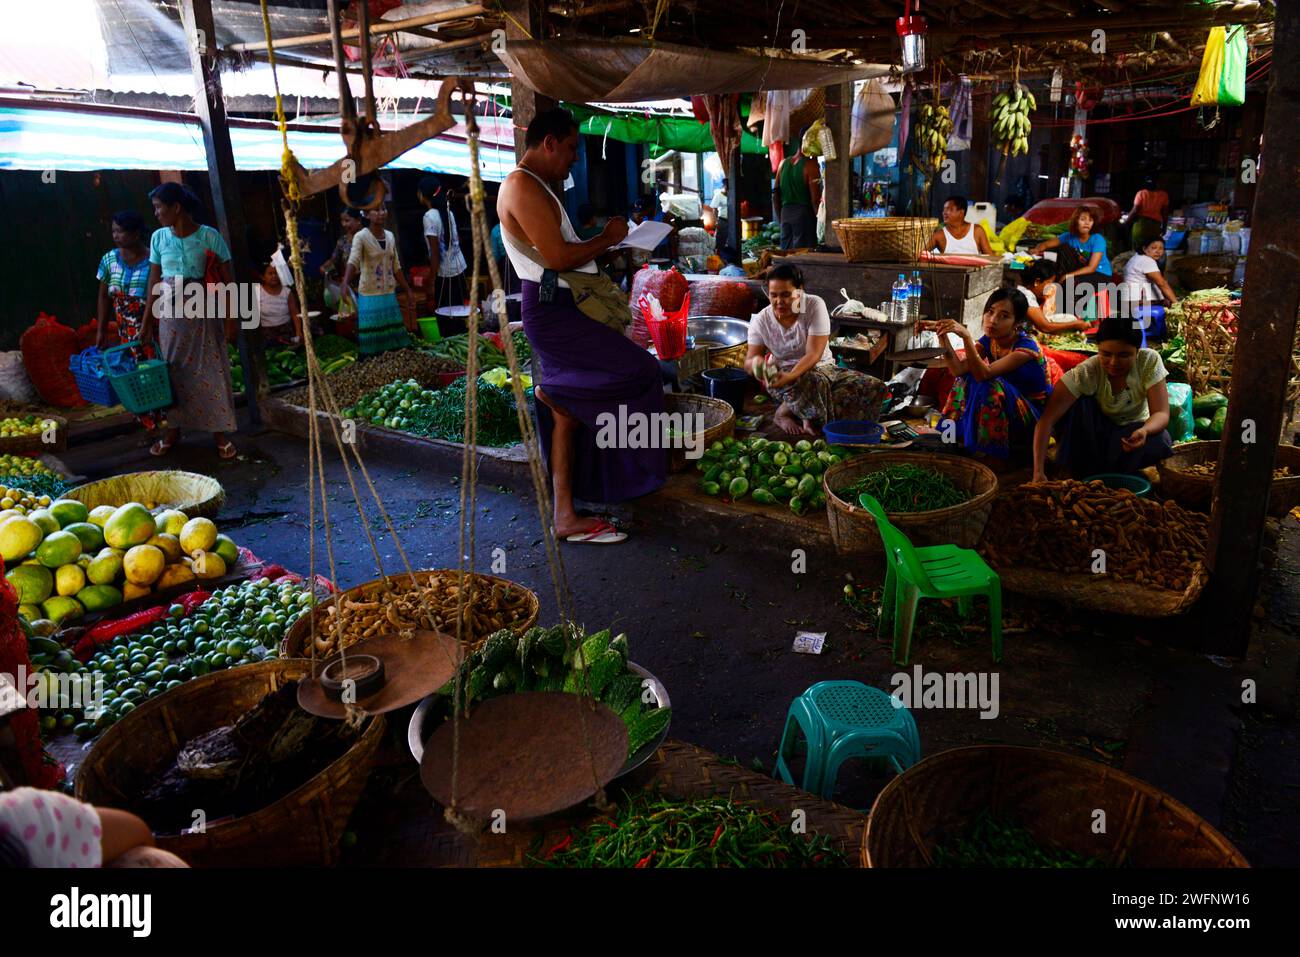 The vibrant fresh produce market in Sittwer, Myanmar. Stock Photo